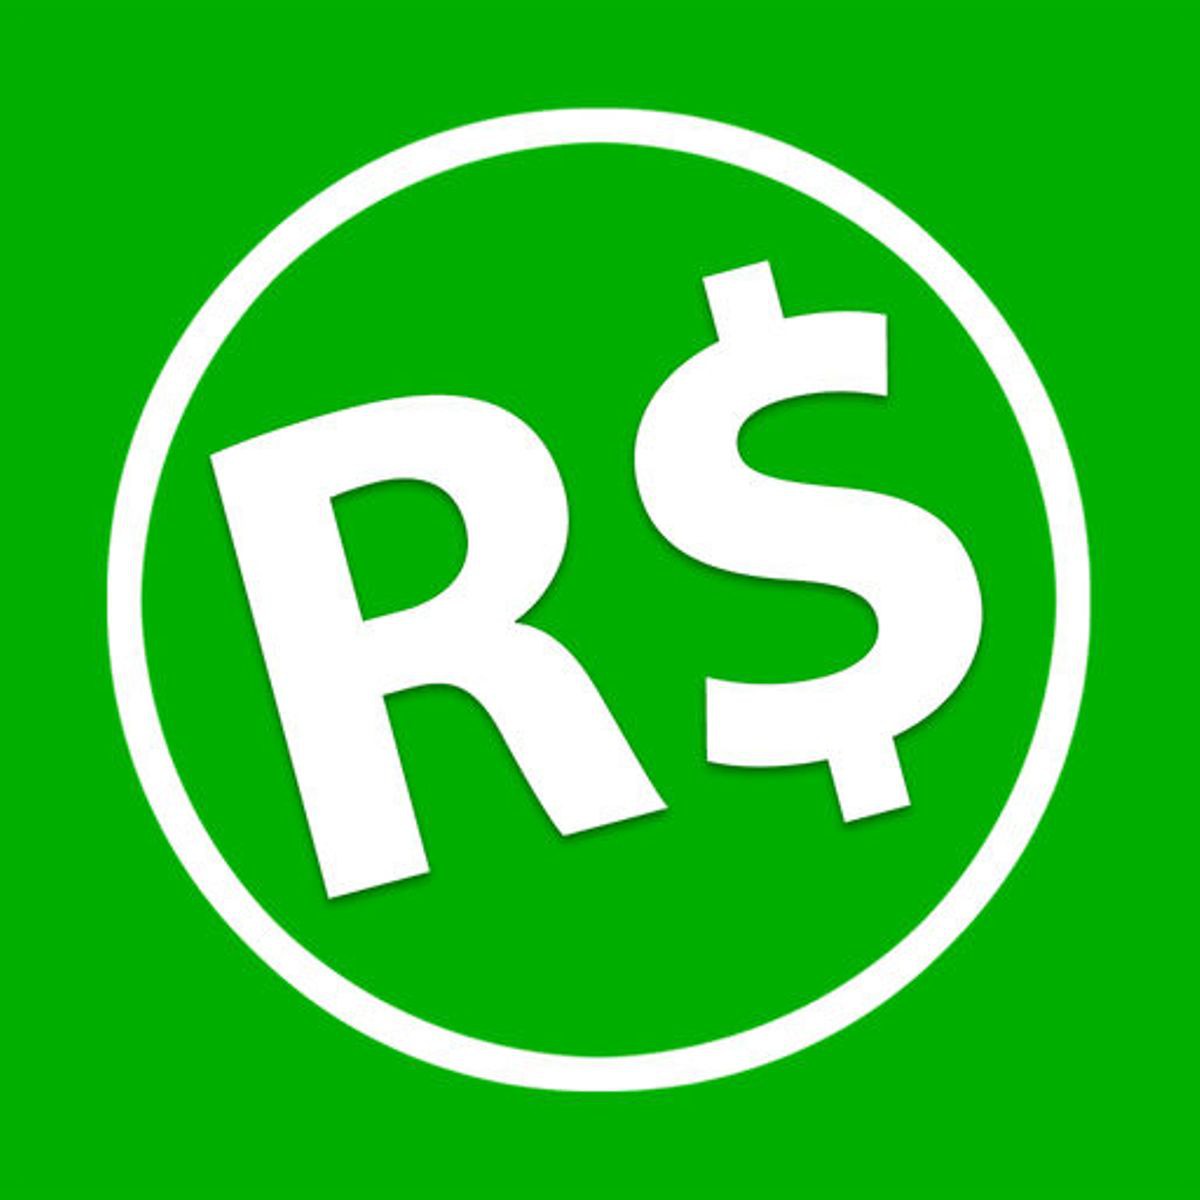 Rbx Robux Rewards - roblox wanted money hack visit buxgg robux